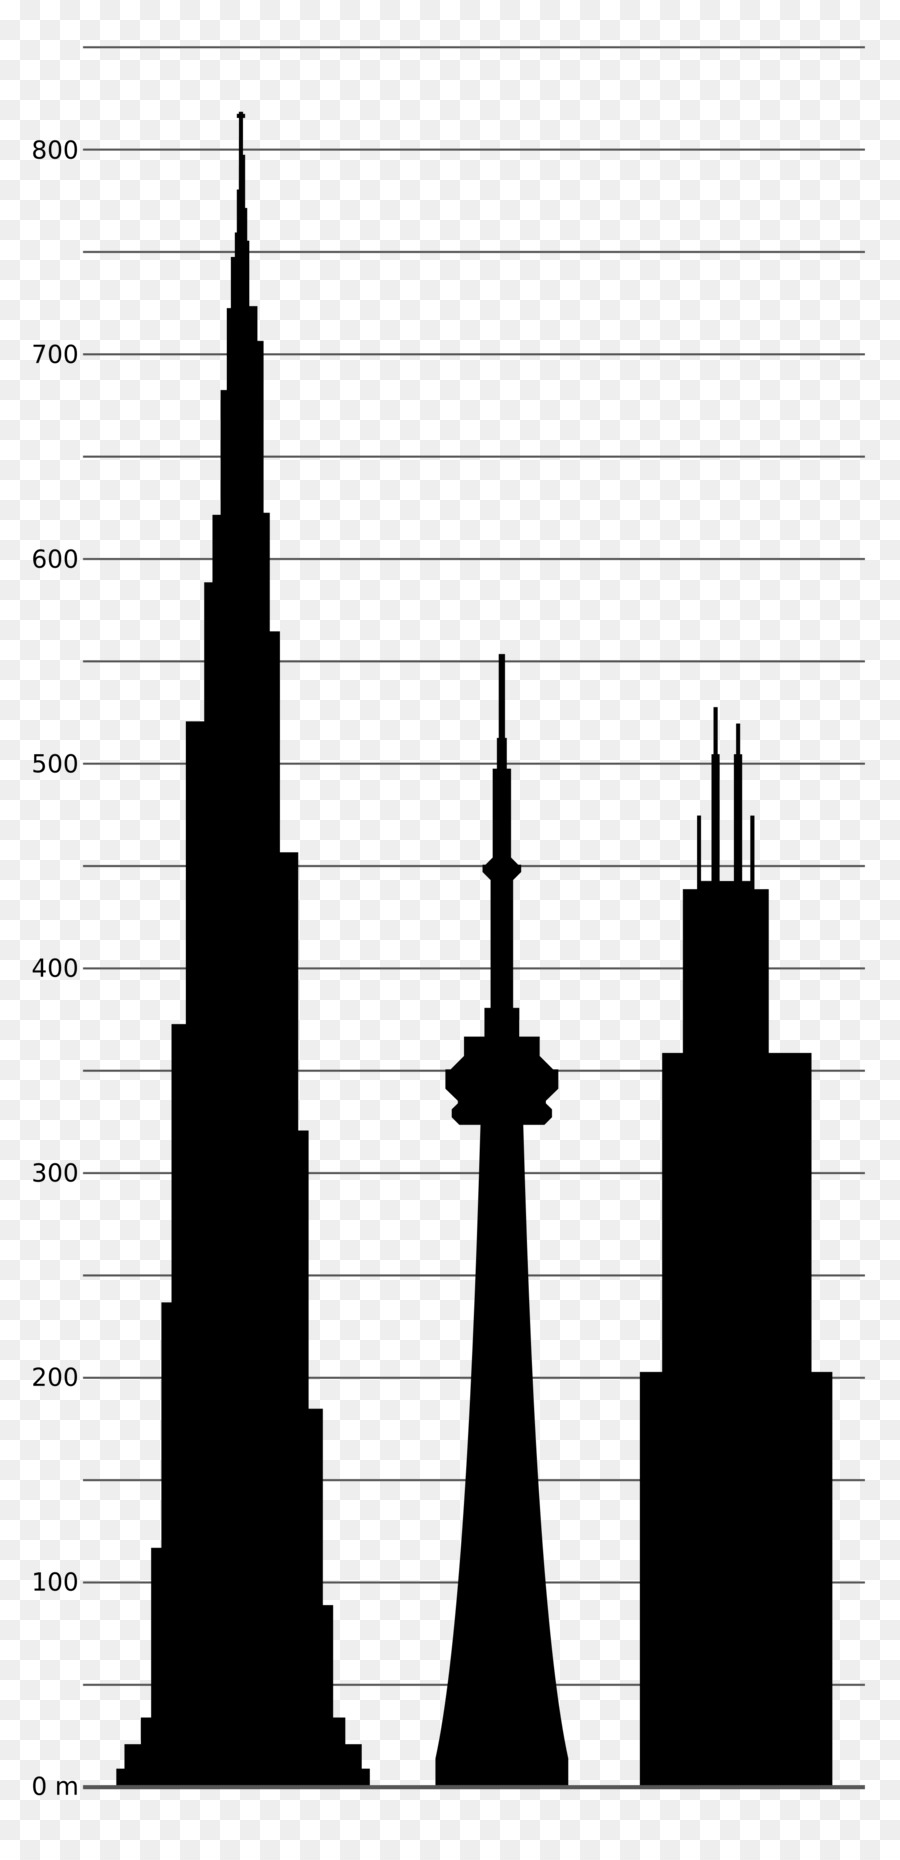 Willis Tower CN Tower 875 North Michigan Avenue Burj Khalifa Space Needle - burj khalifa png download - 2000*4091 - Free Transparent Willis Tower png Download.